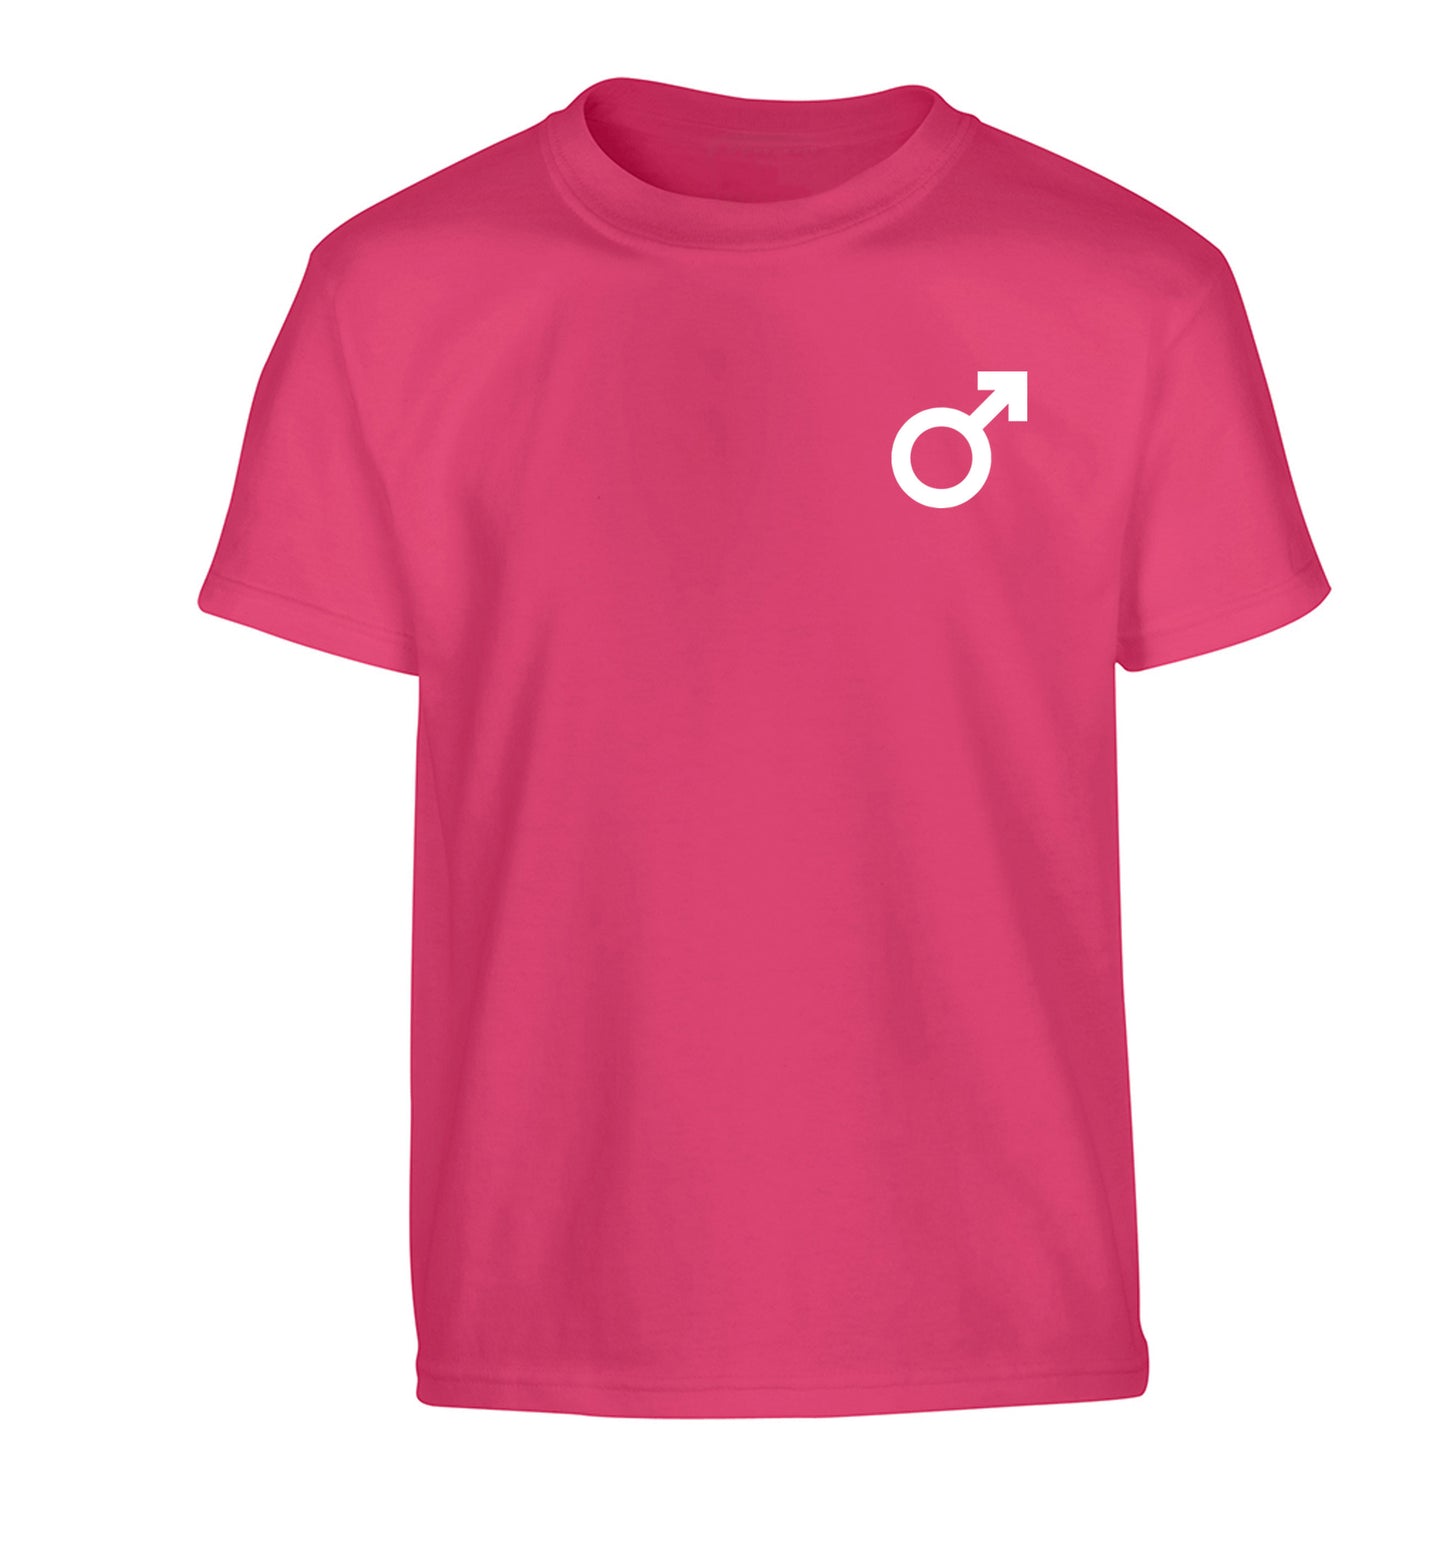 Male symbol pocket Children's pink Tshirt 12-14 Years